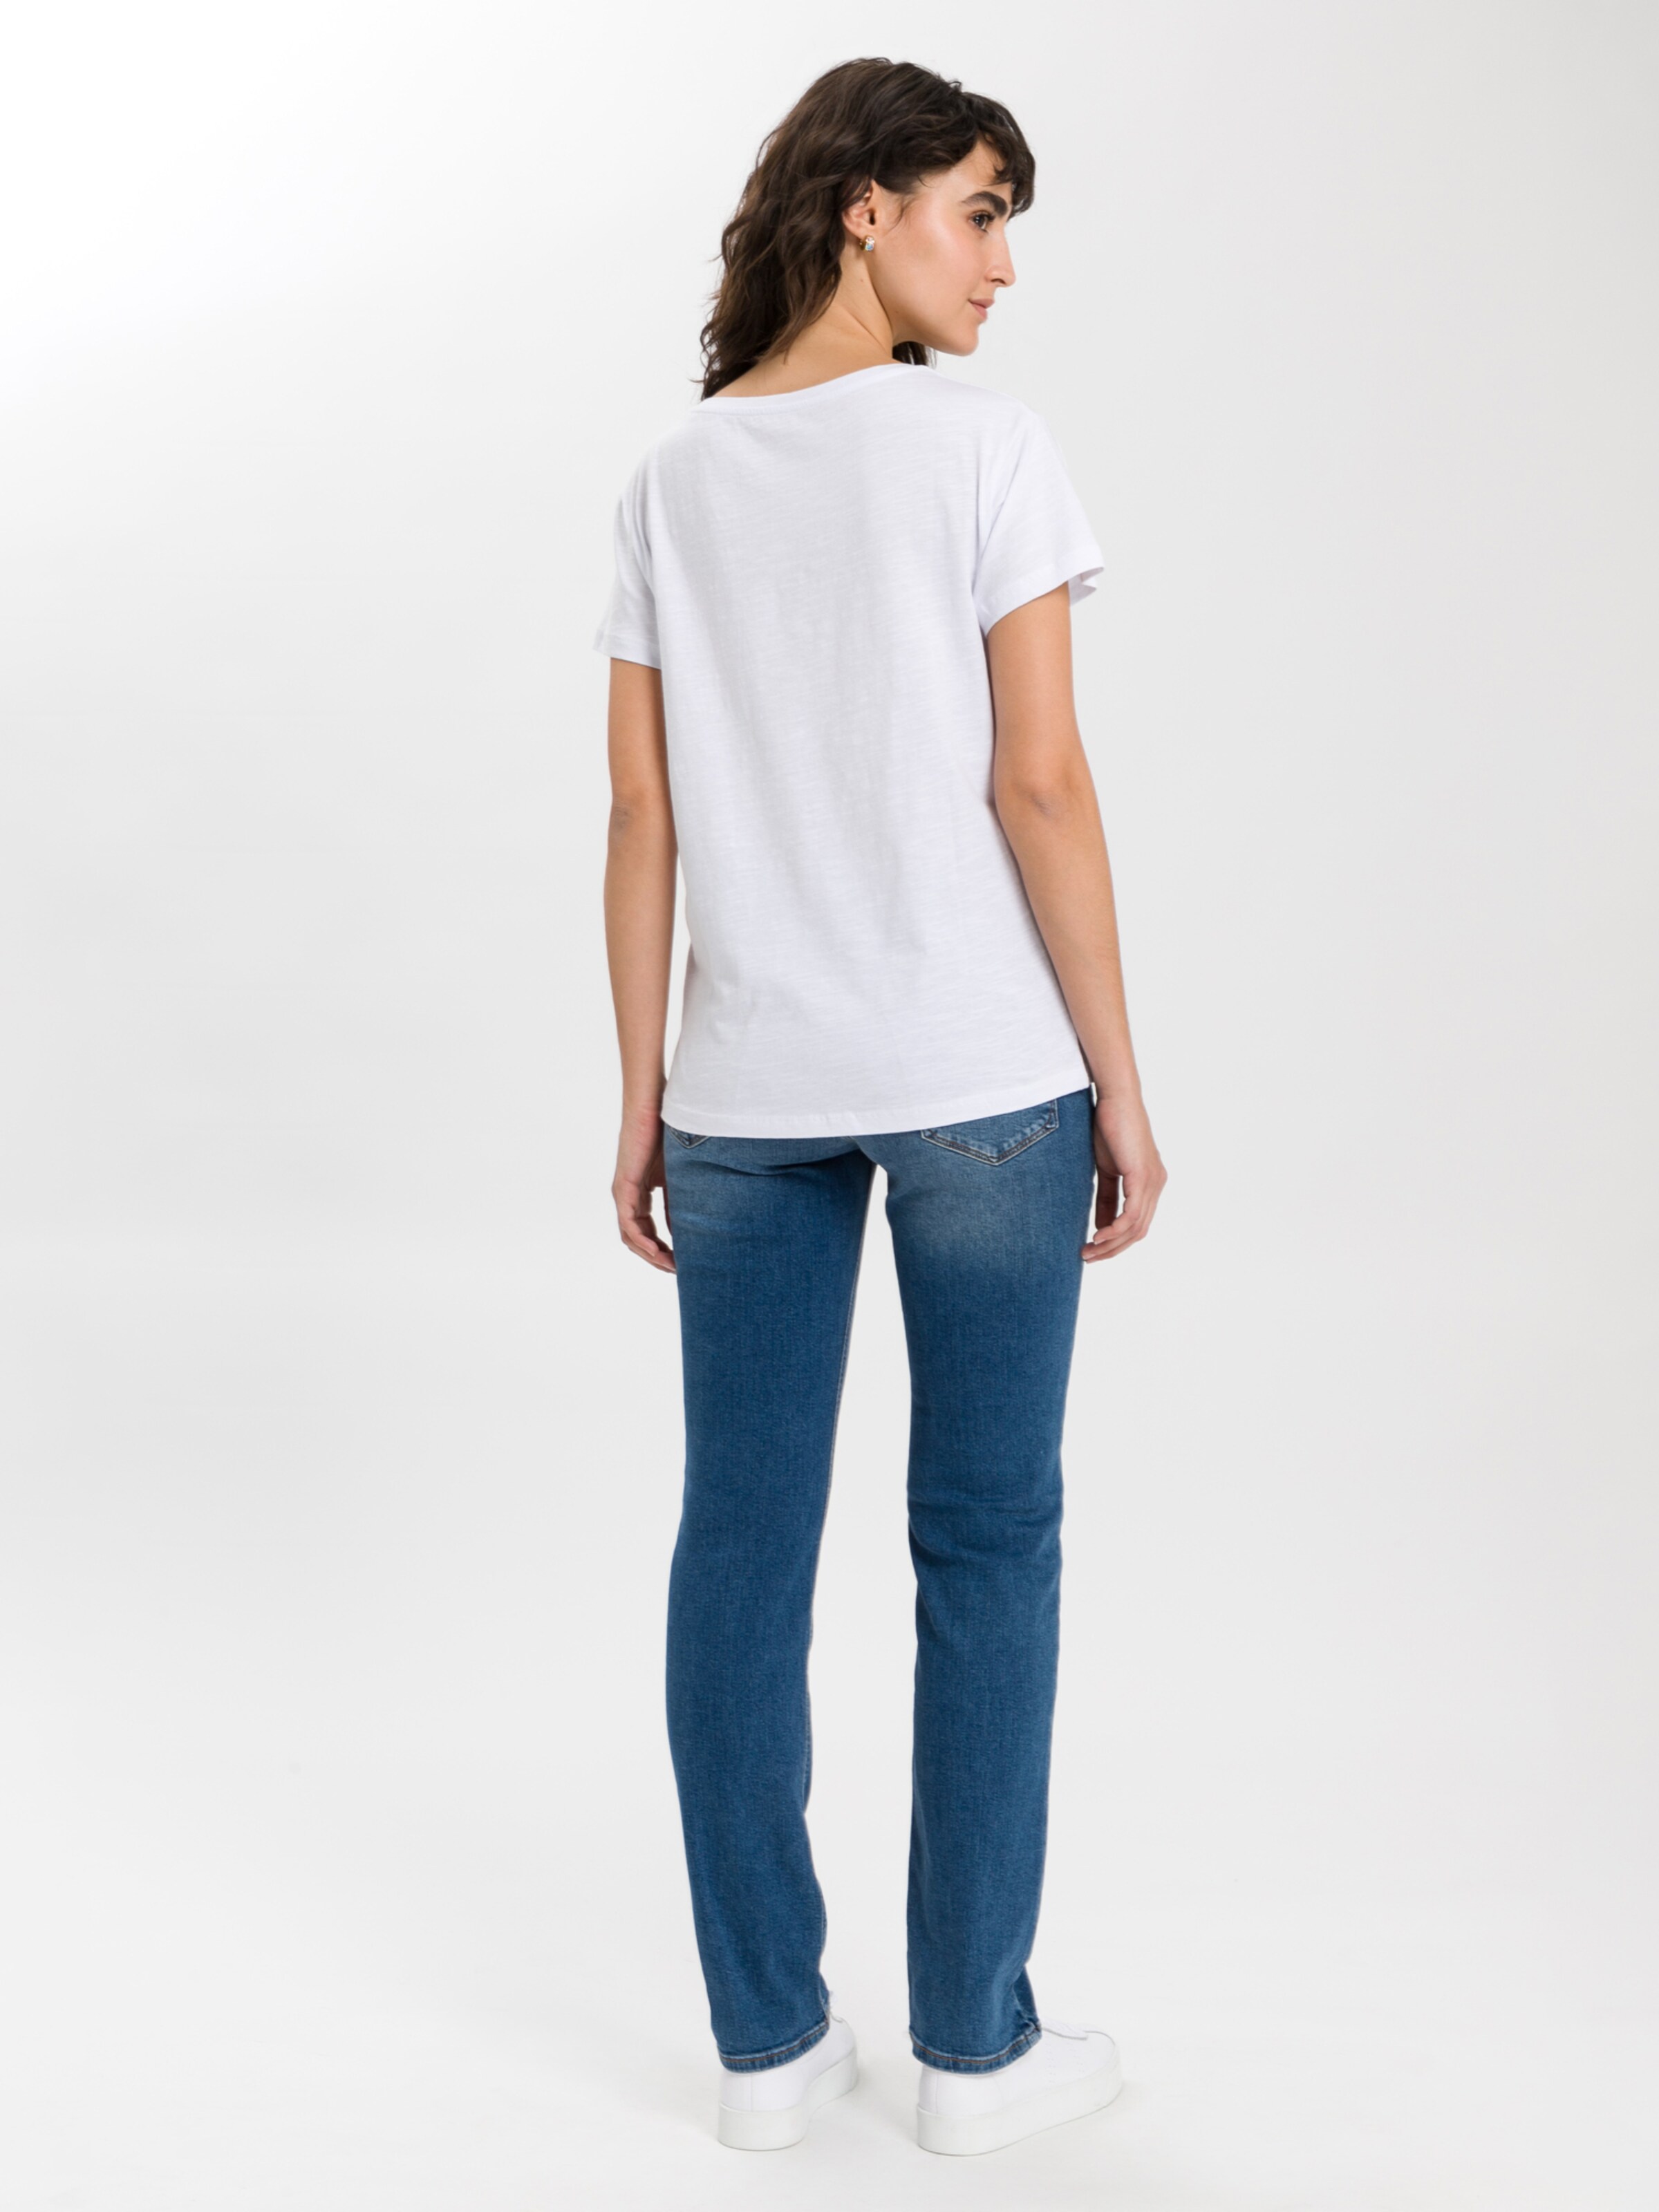 Frauen Shirts & Tops Cross Jeans Shirt in Weiß - YP47418